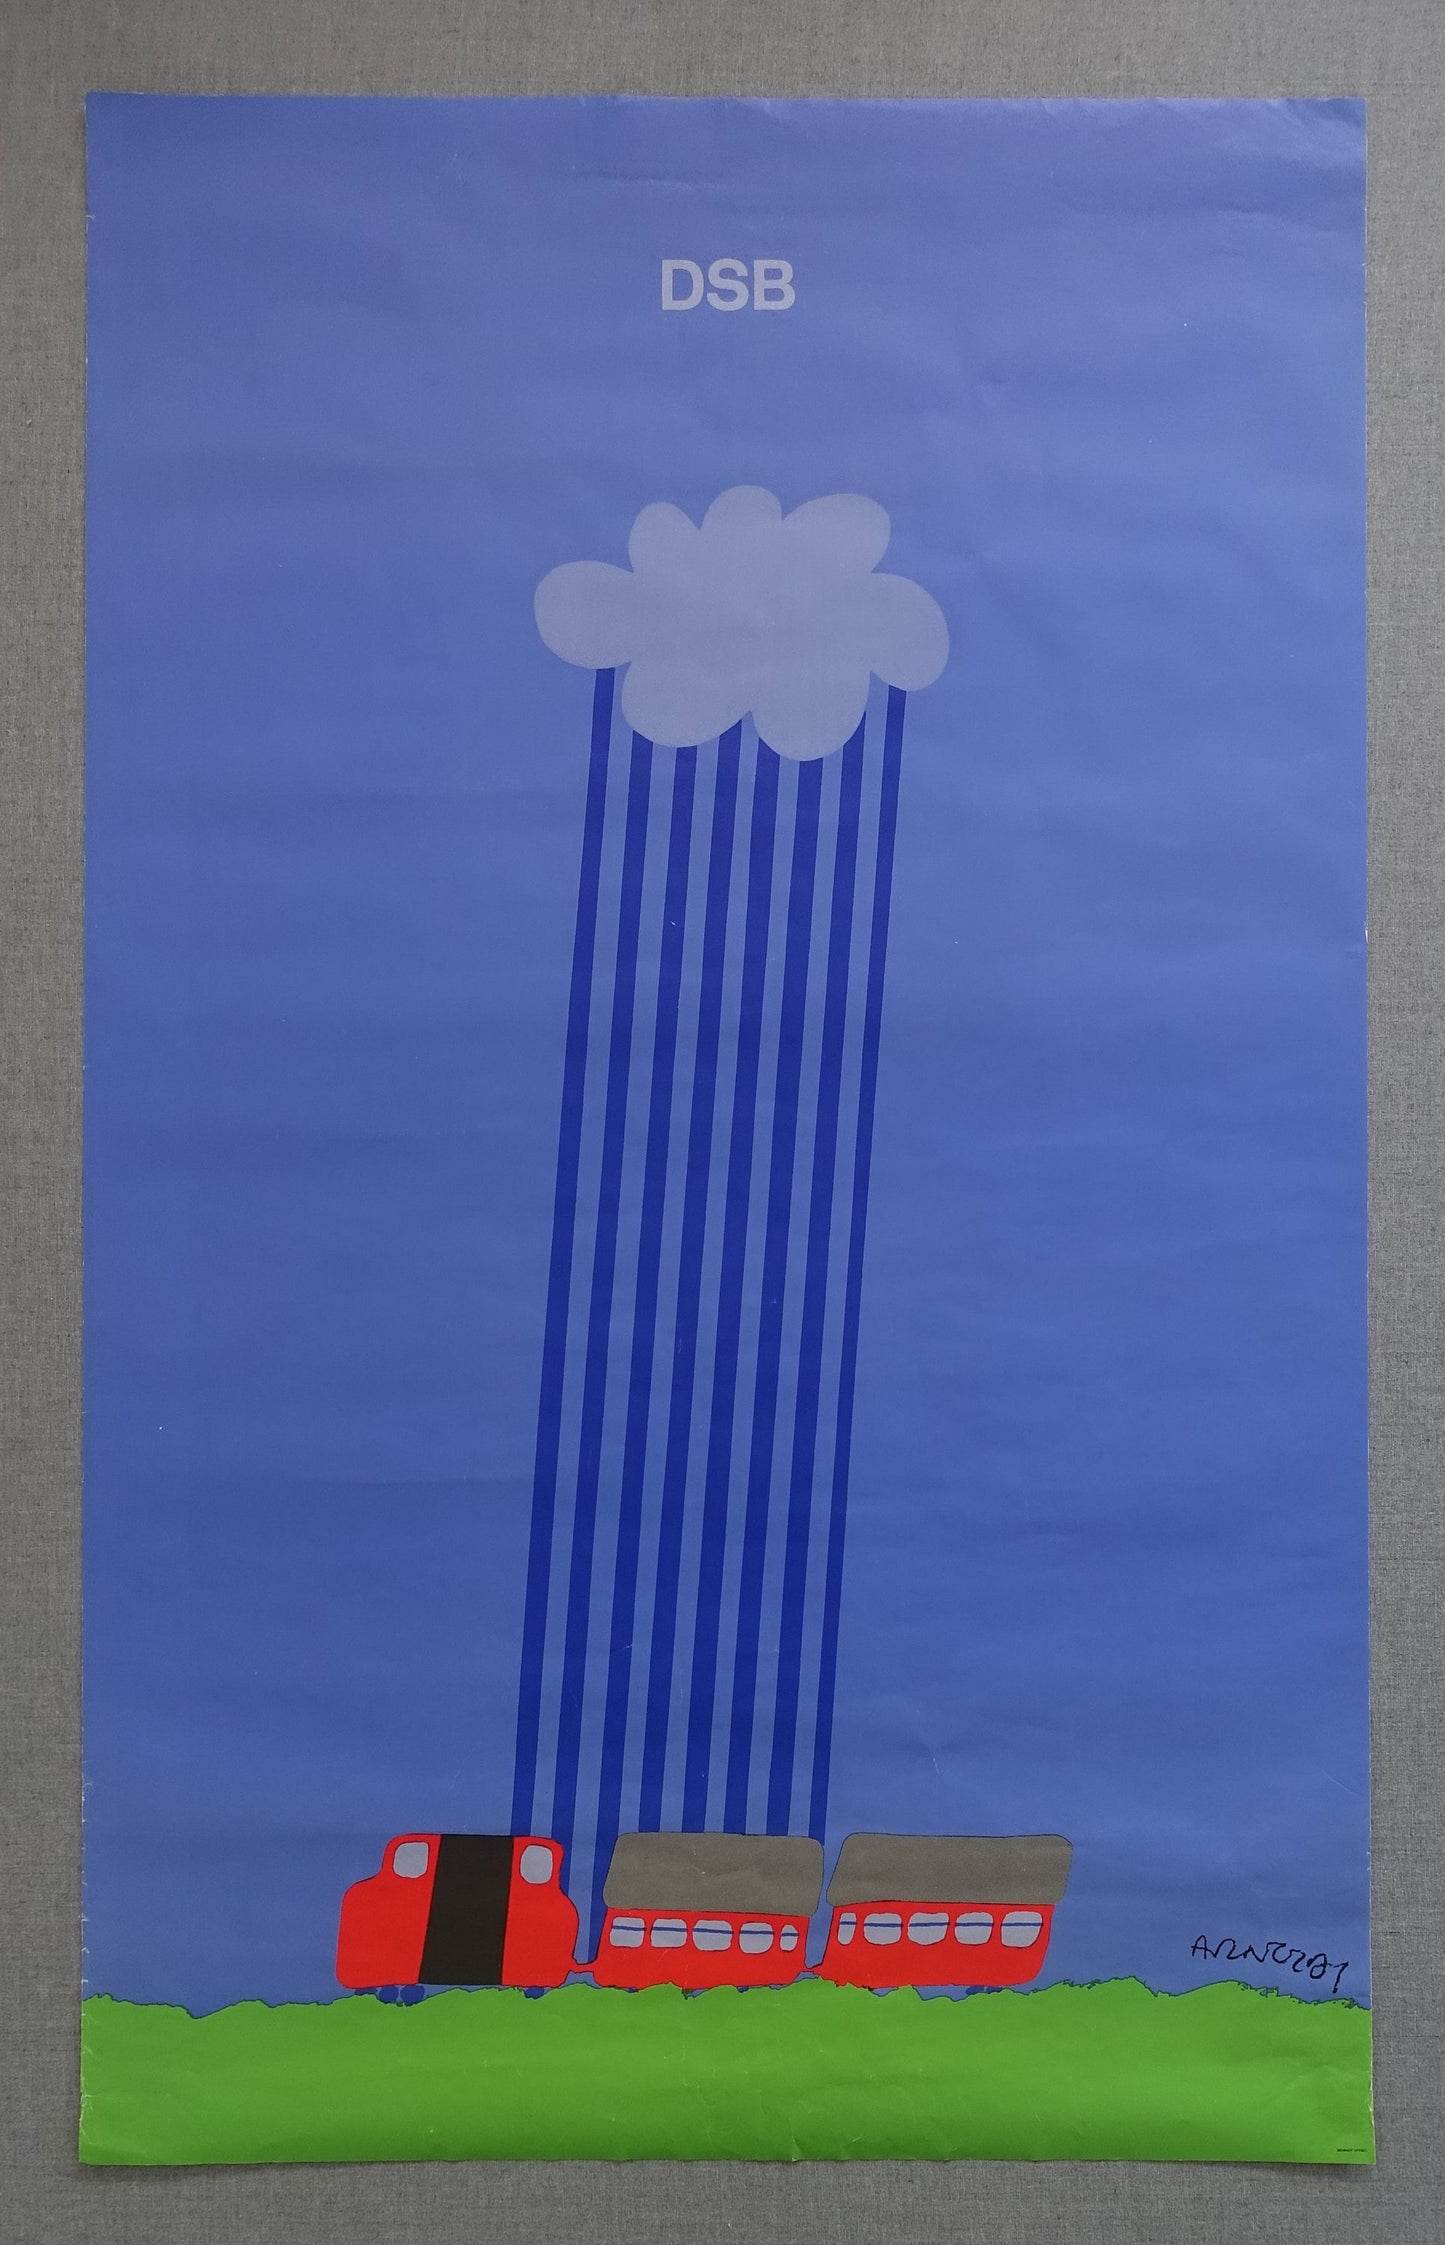 1975 Arnoldi Advertisement for Danish State Railways (Rain) - Original Vintage Poster